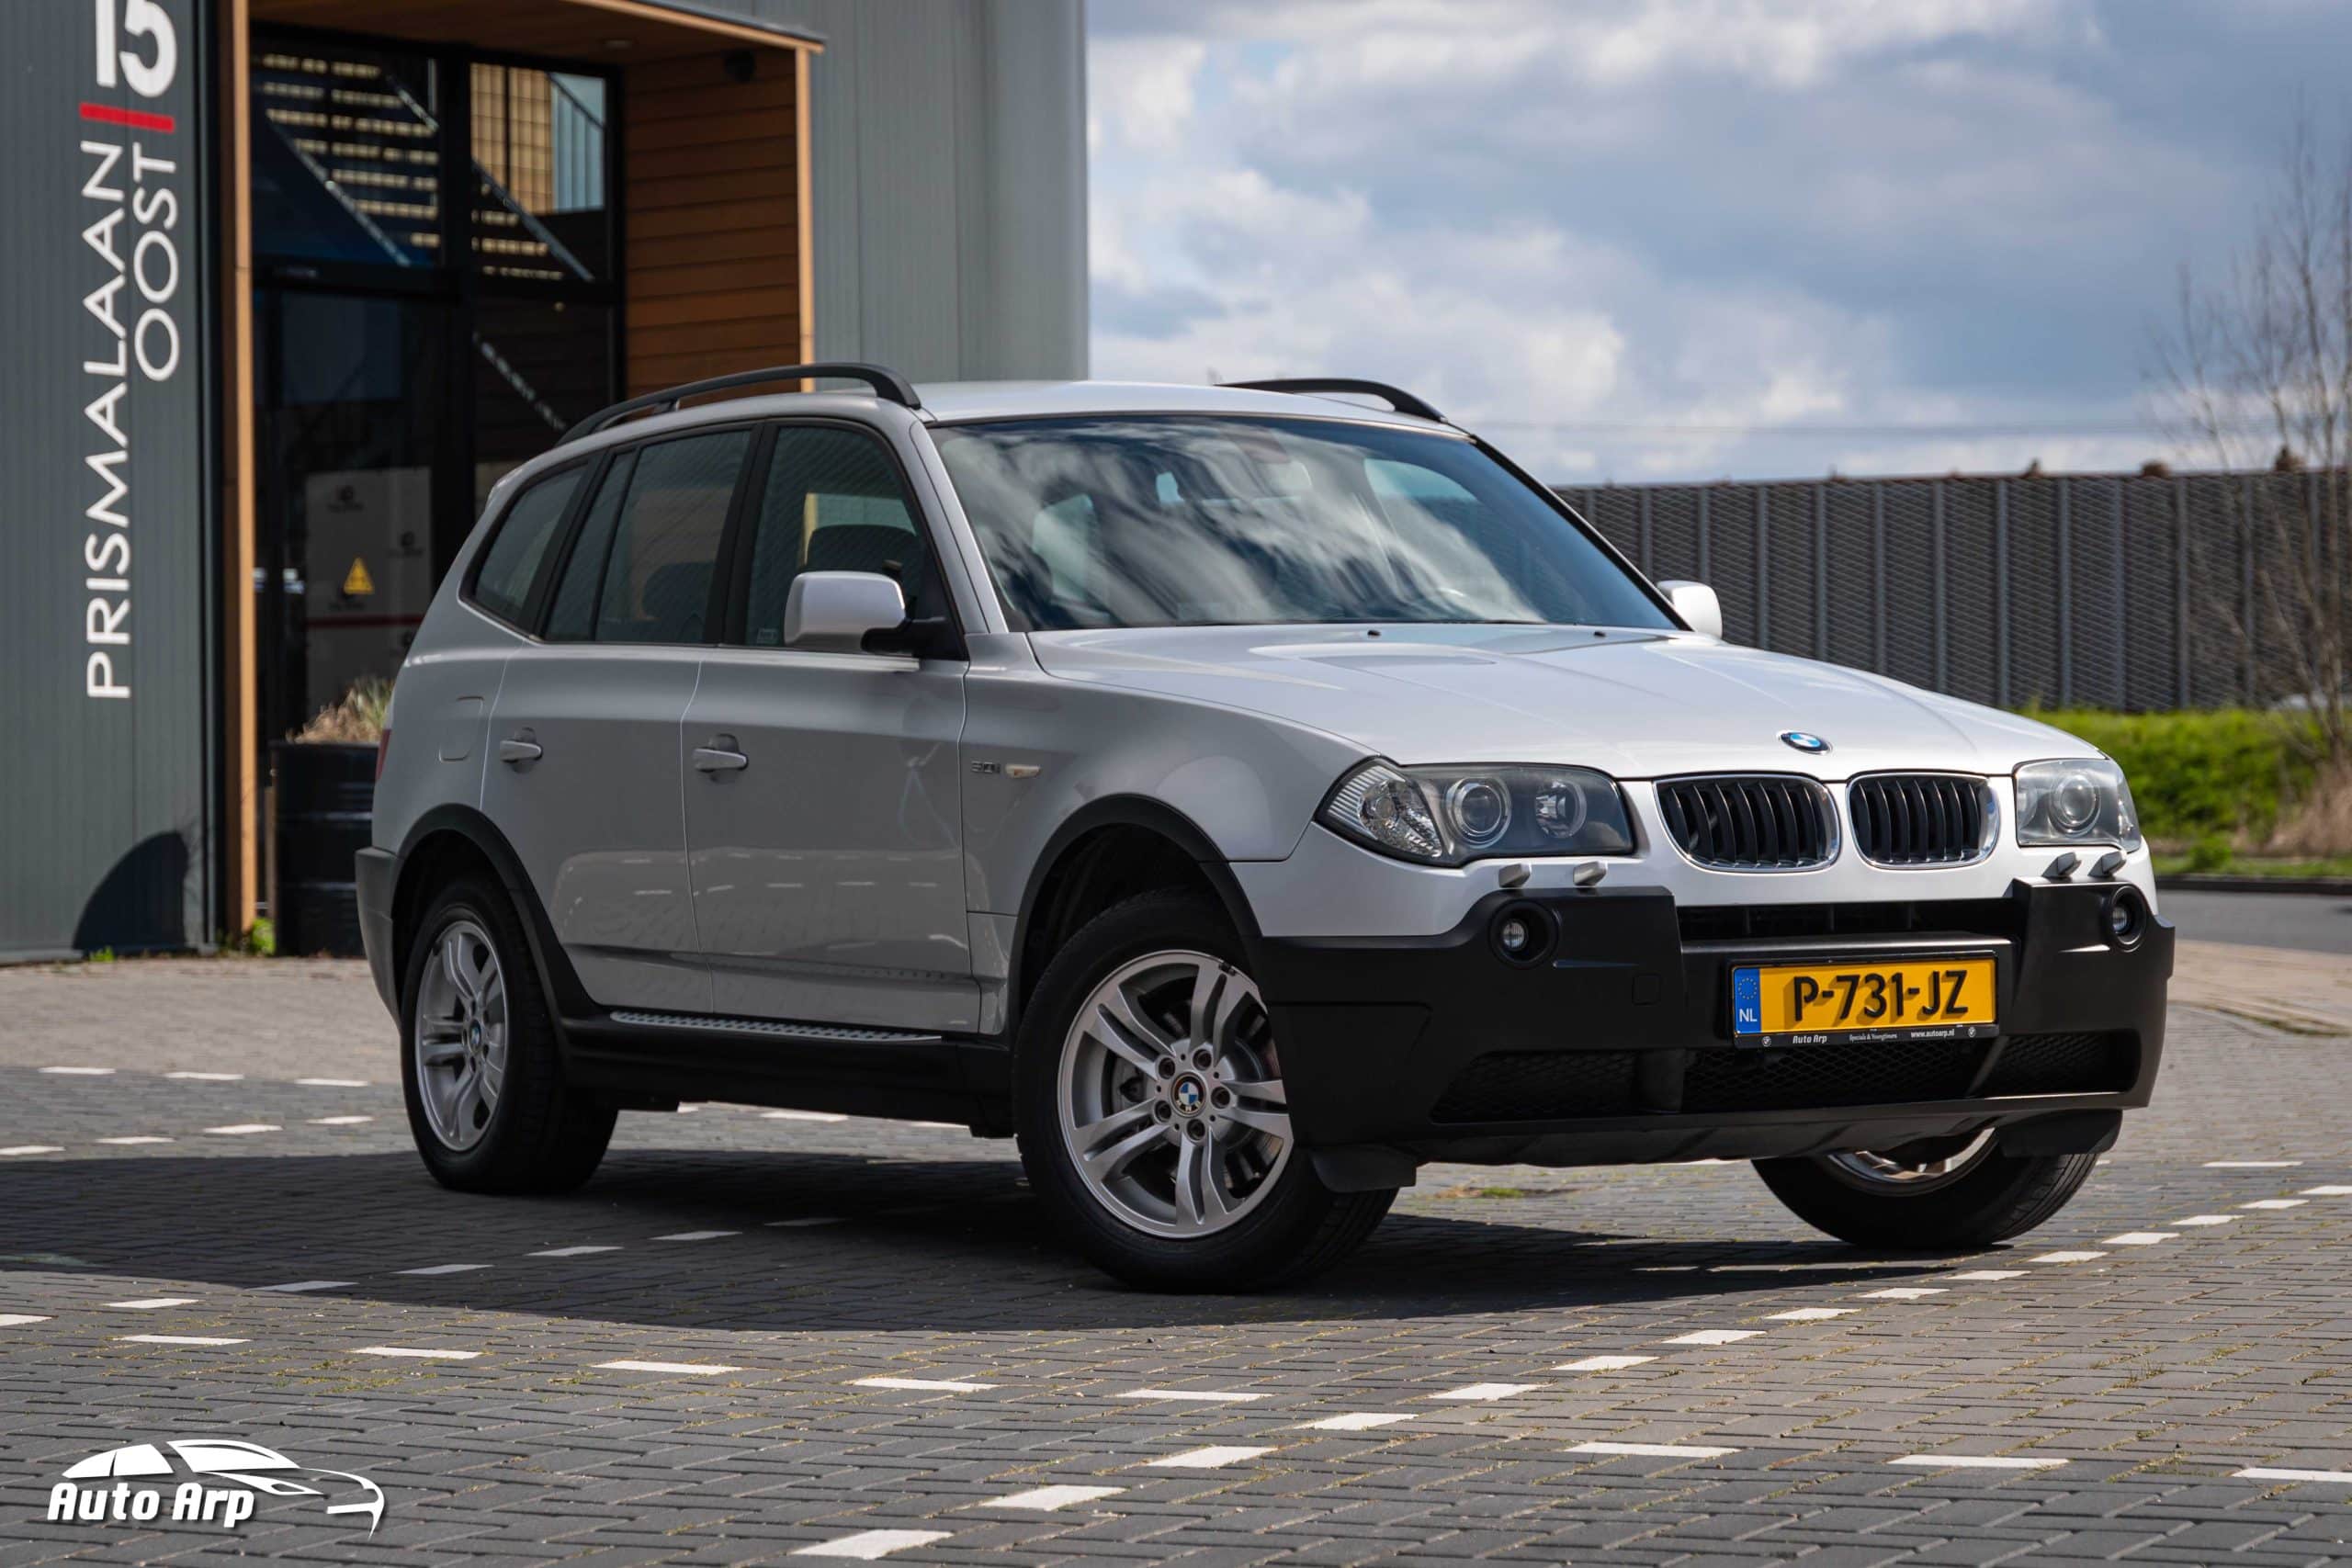 https://www.autoarp.nl/wp-content/uploads/2022/04/BMW-X3-3.0-2-van-30-scaled.jpg